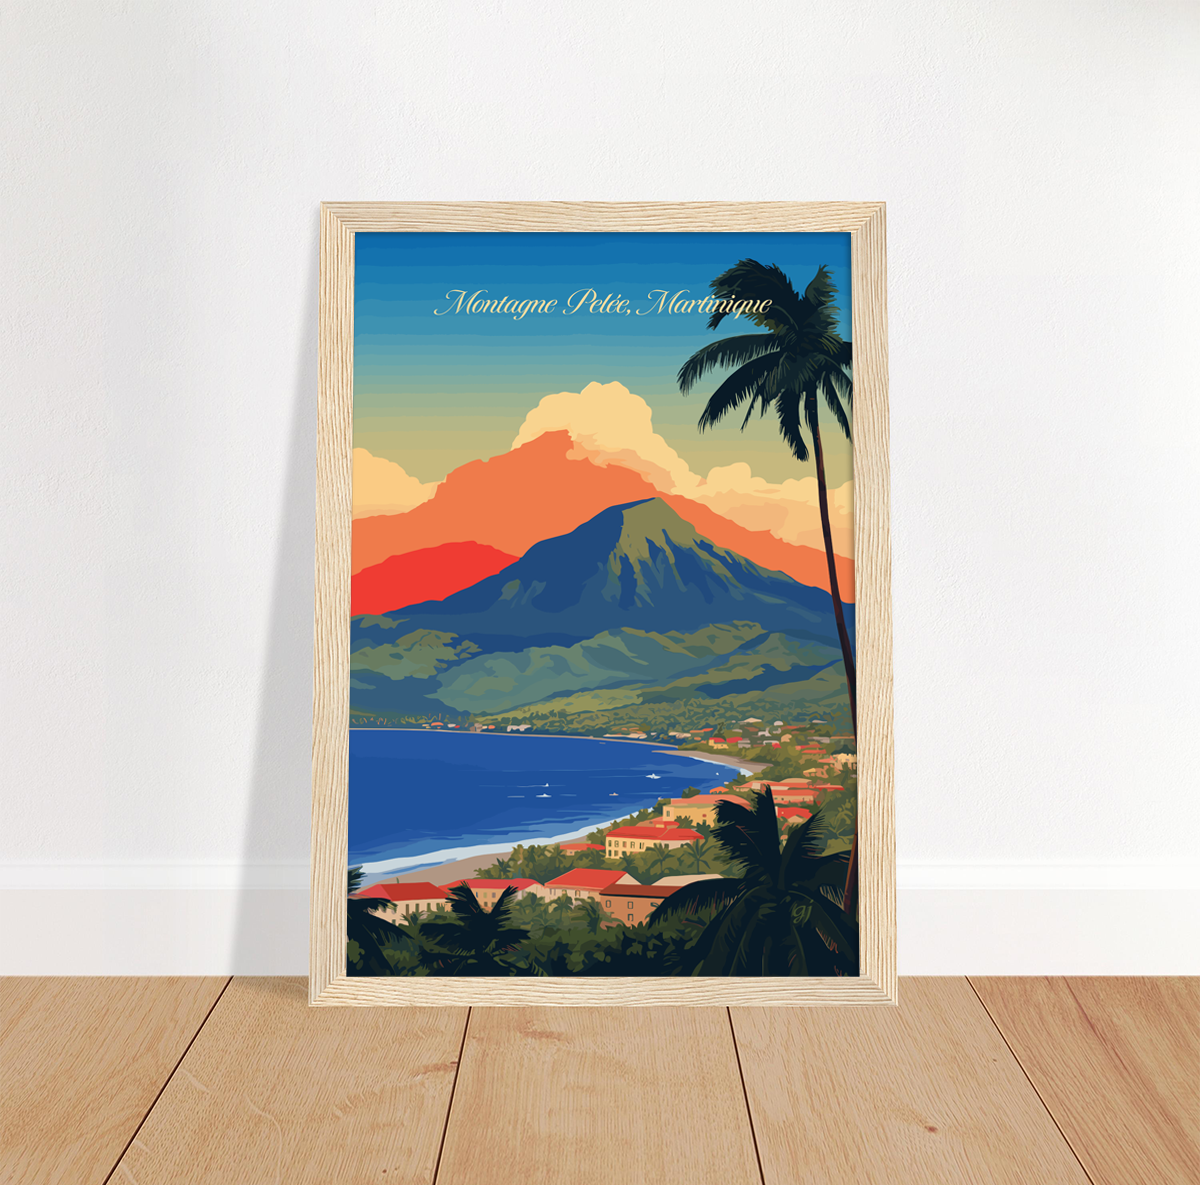 Martinique - Montagne Pelee poster by bon voyage design